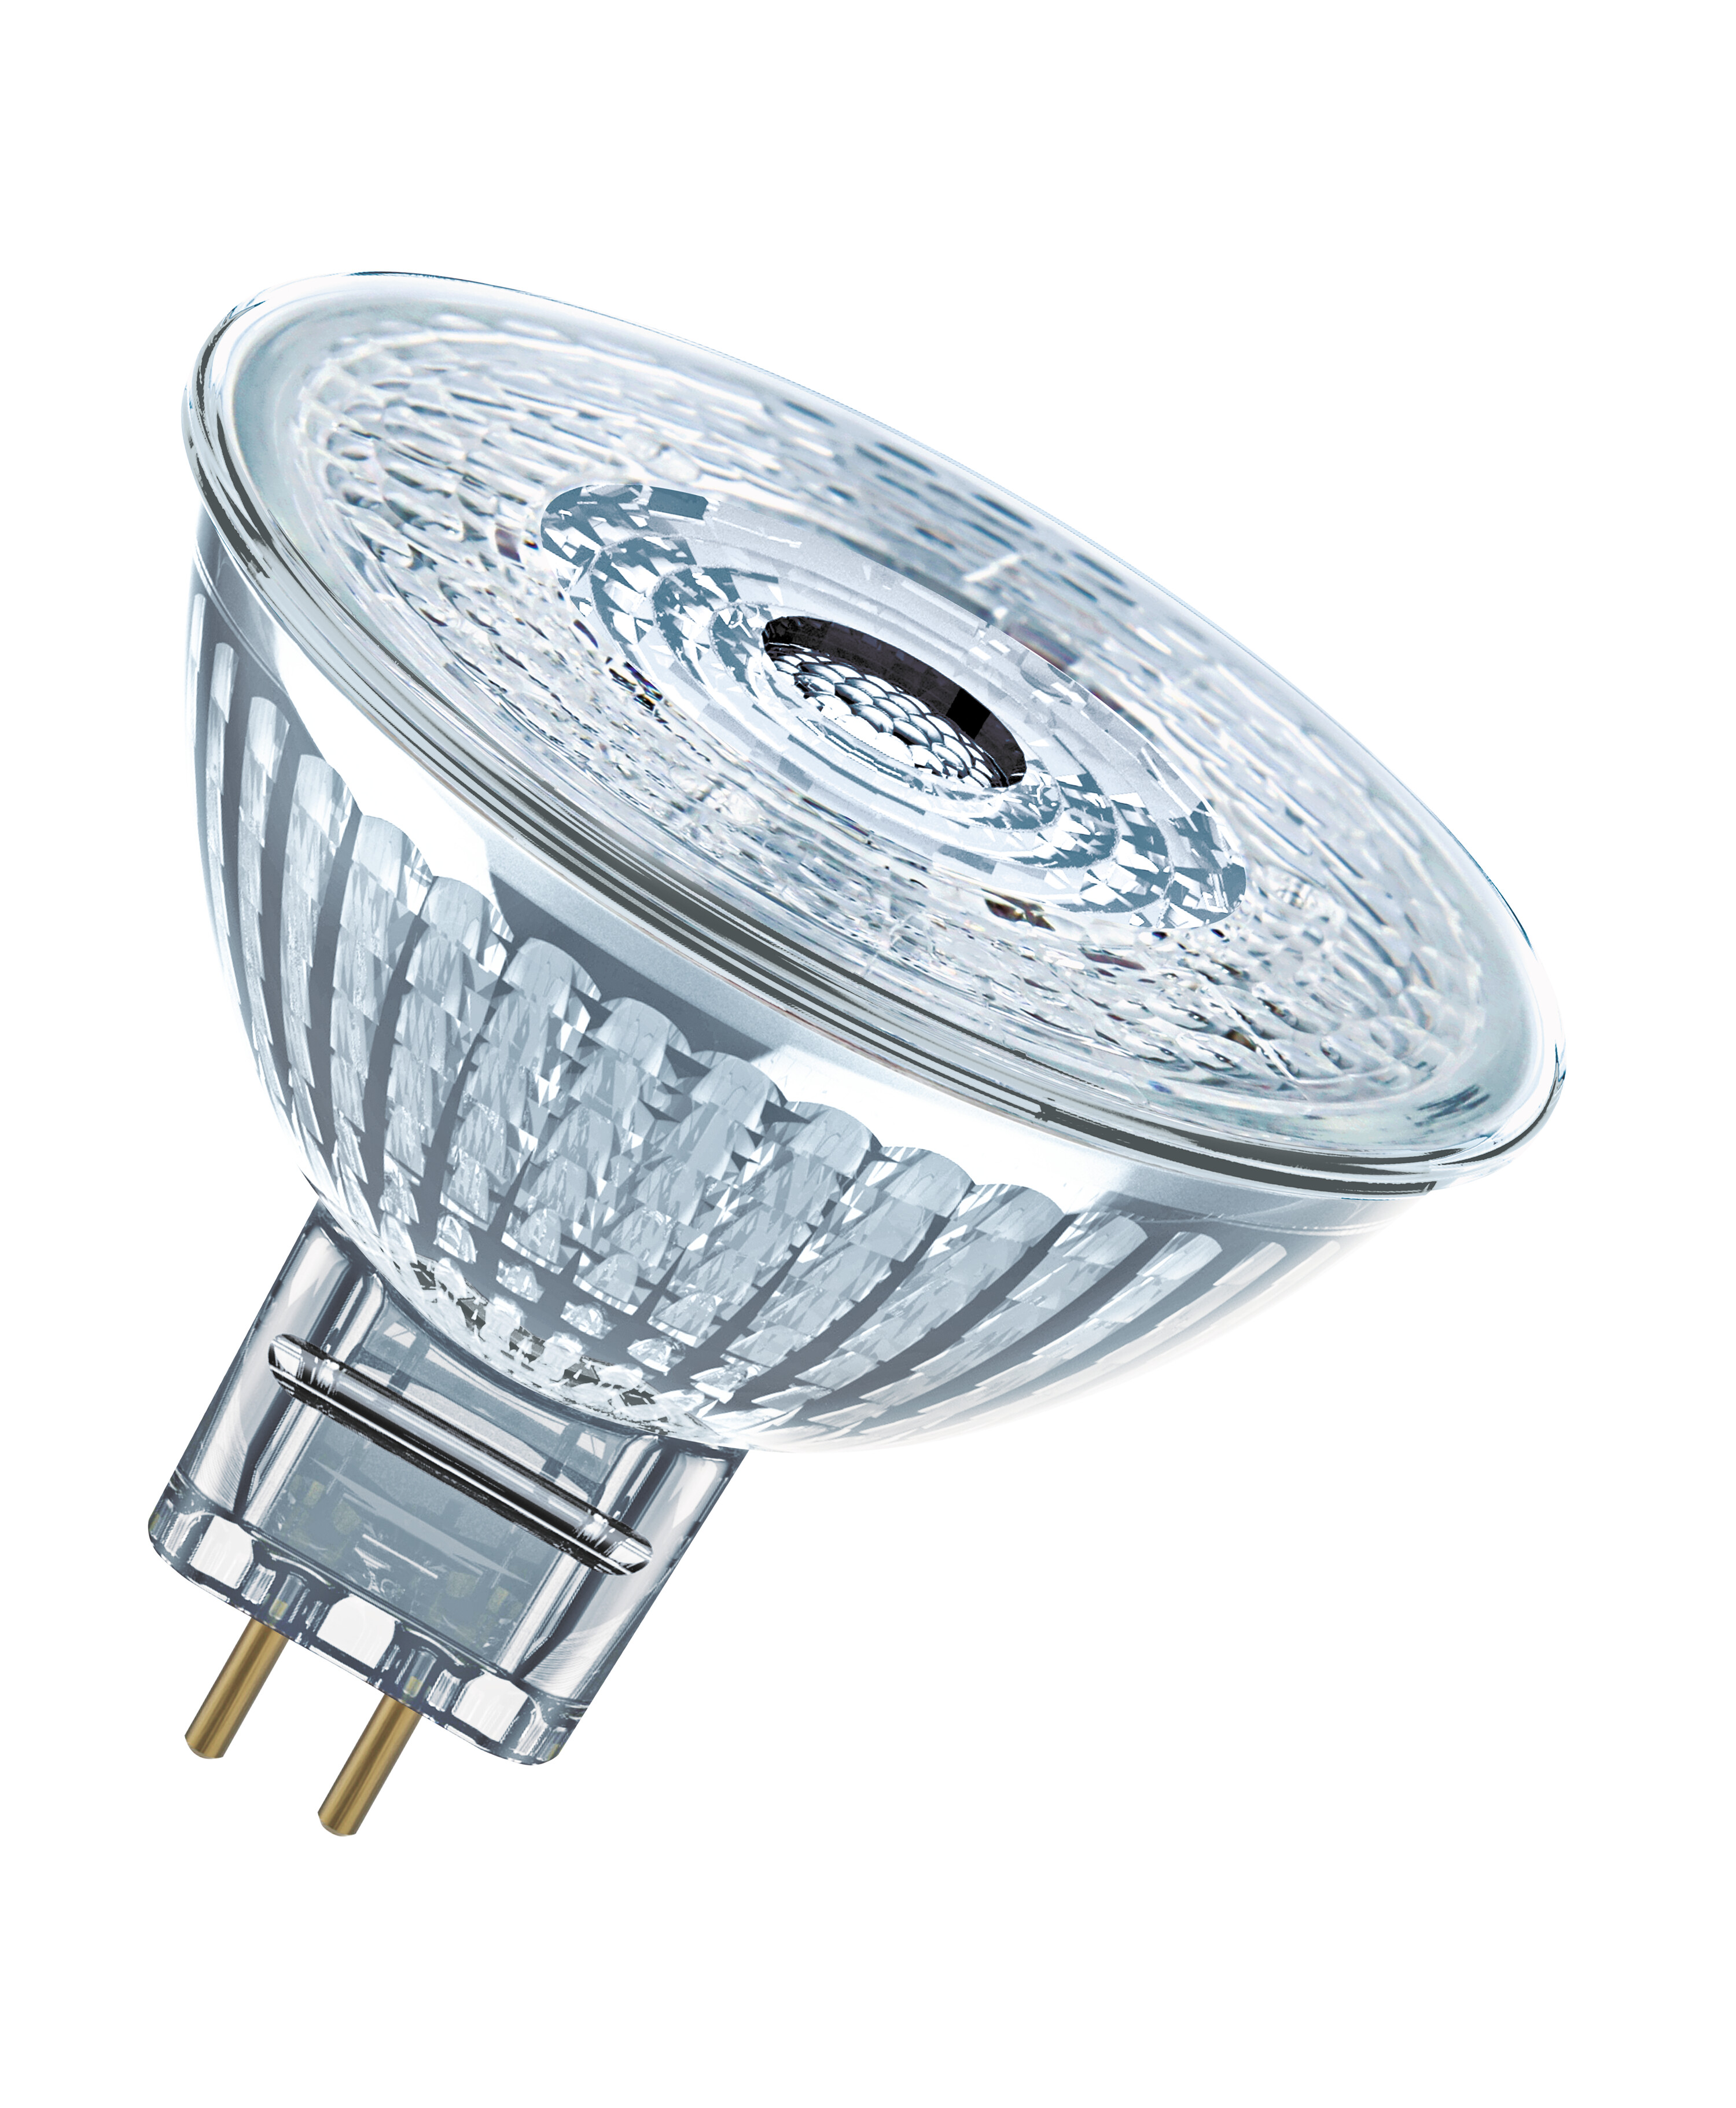 OSRAM  LED STAR MR16 12 V LED Kaltweiß Lampe